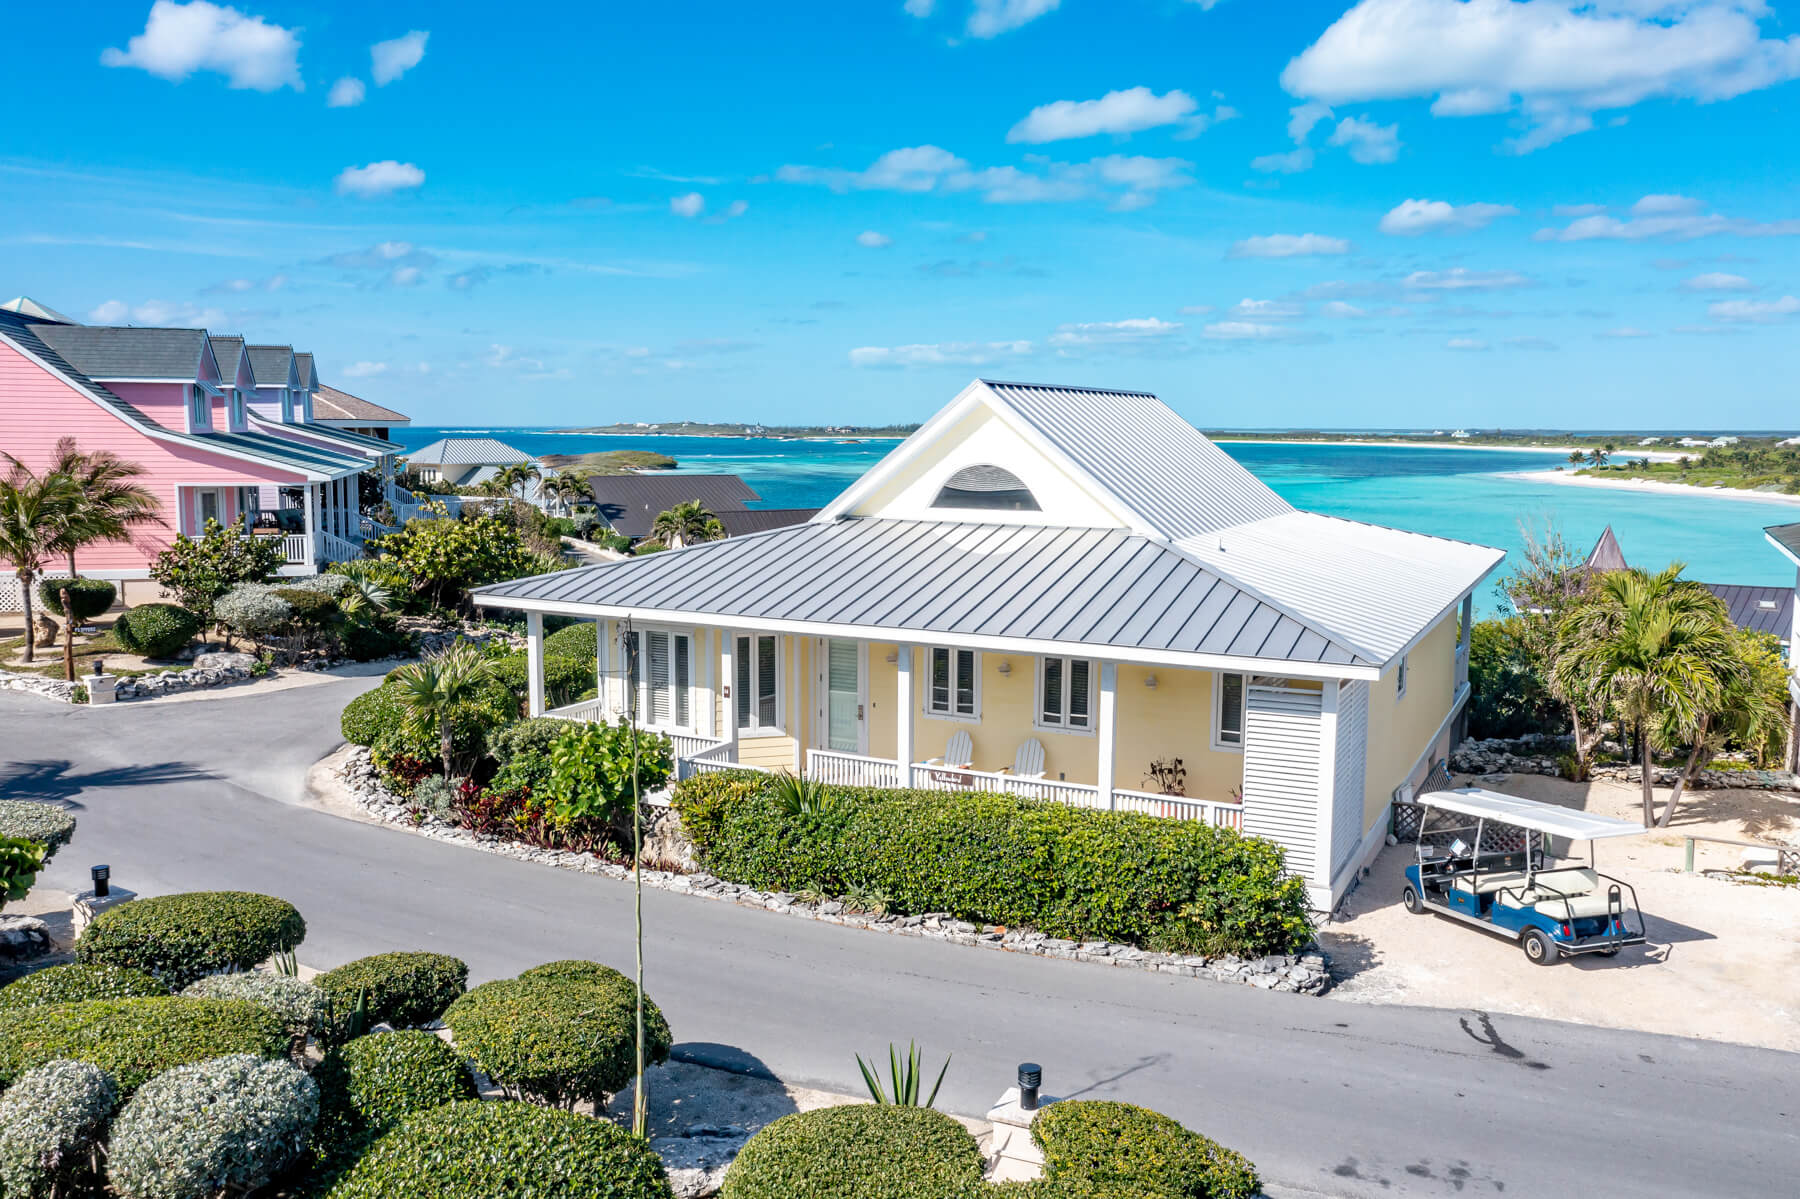 Luxurious beachfront villa at Yellowbird a listing of The Abaco Club